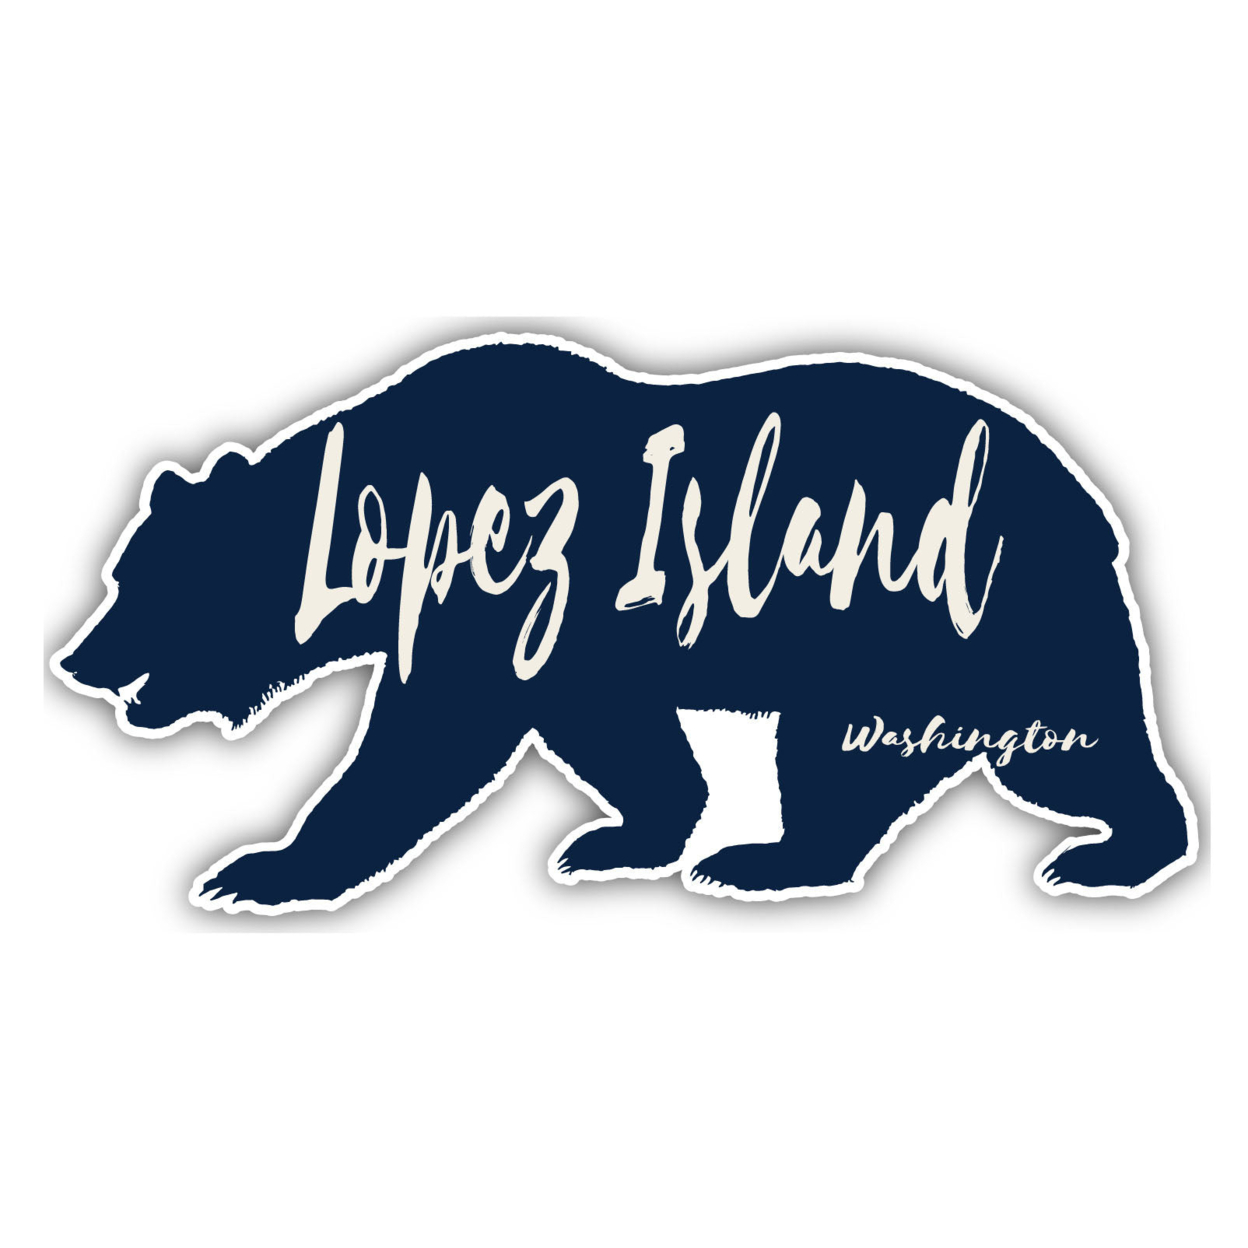 Lopez Island Washington Souvenir Decorative Stickers (Choose Theme And Size) - 2-Inch, Camp Life